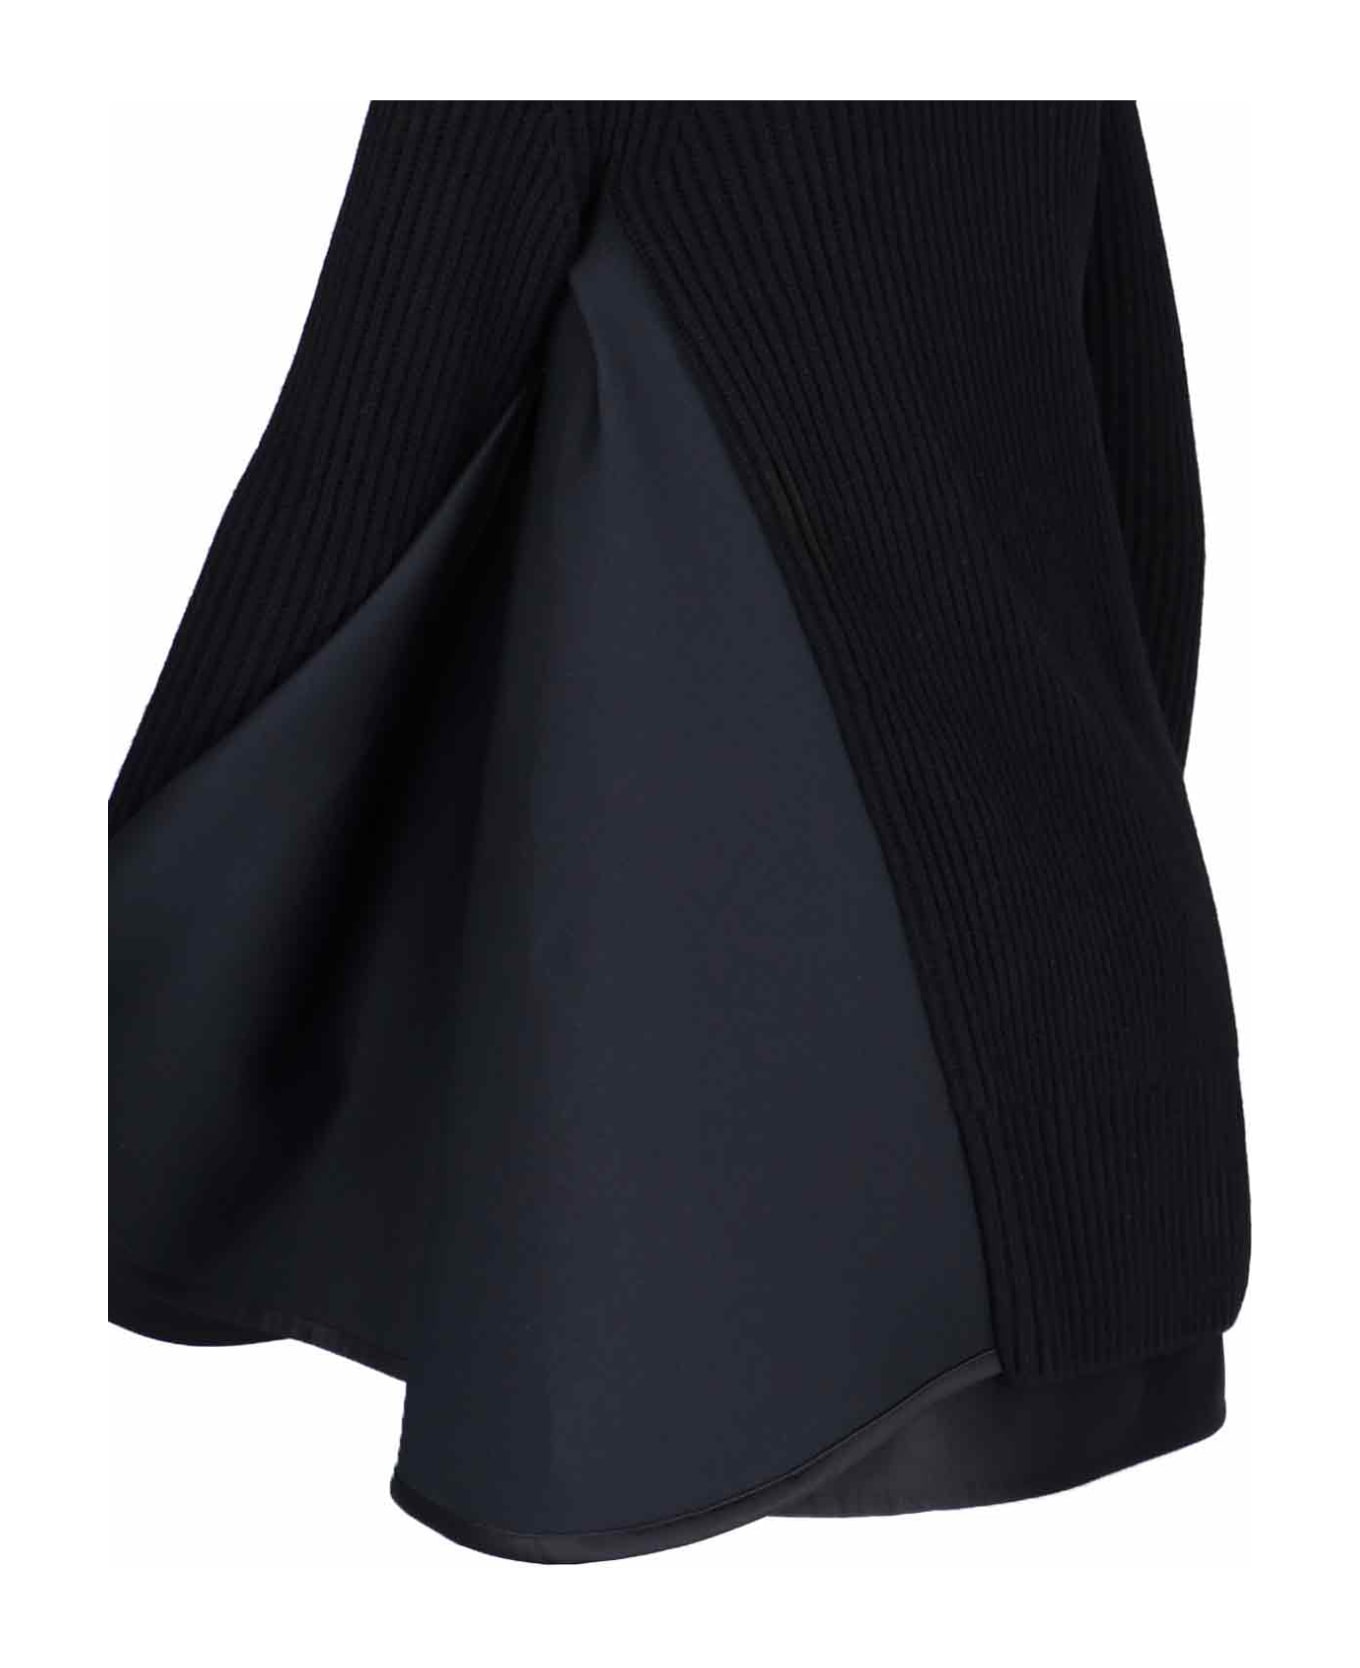 Sacai Knitted Dress - Black  